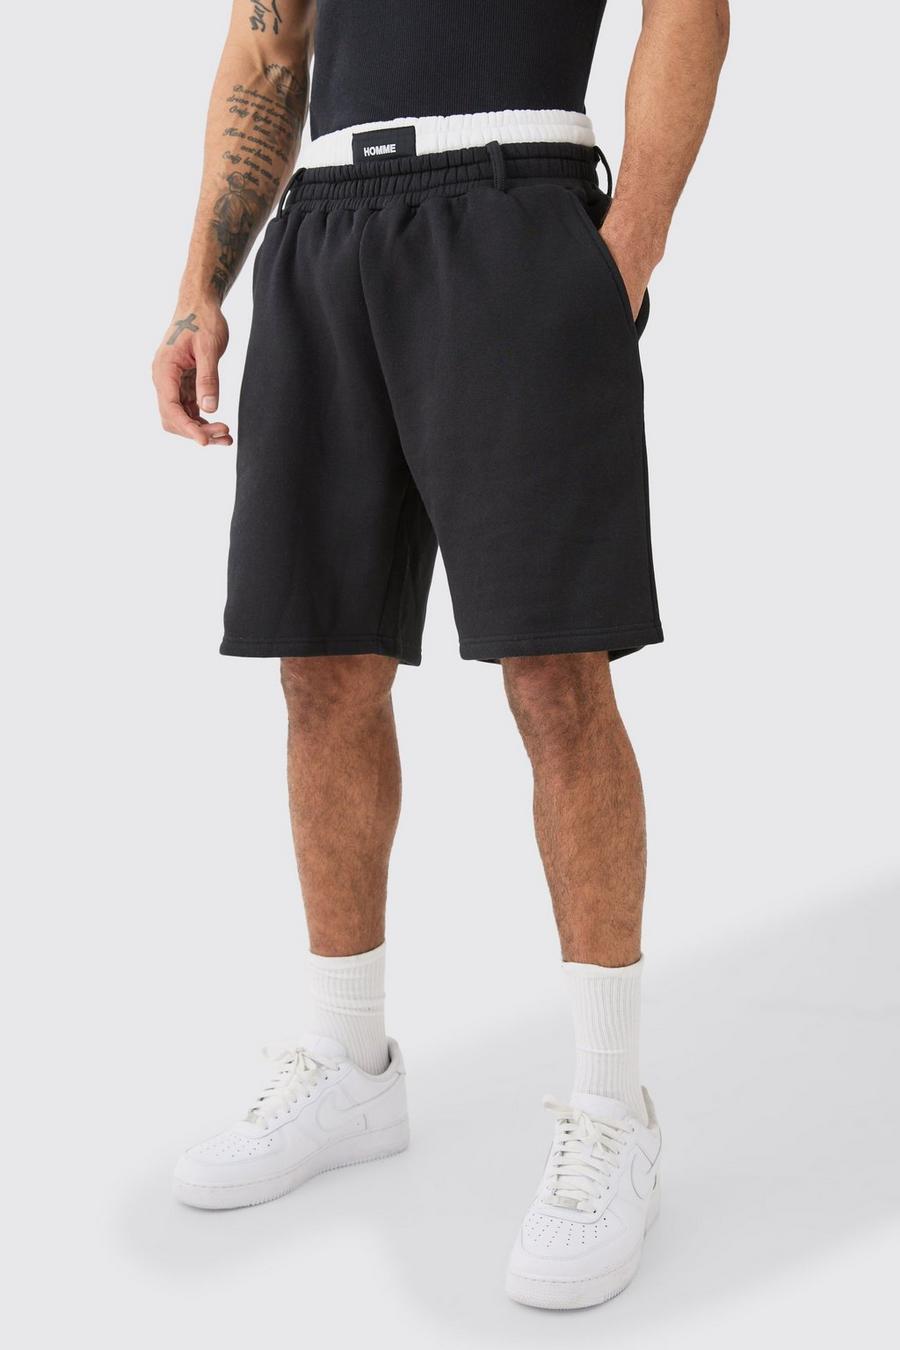 Lockere Shorts mit doppeltem Bund, Black